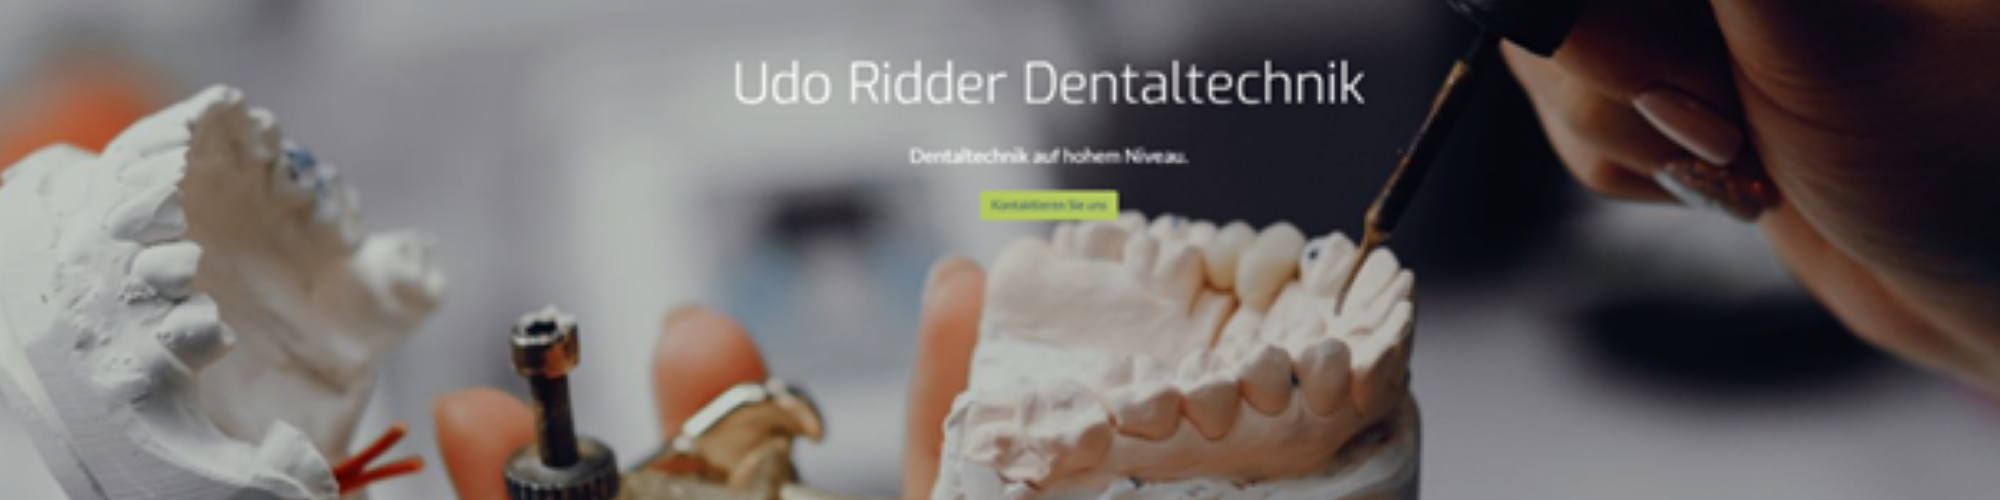 Udo Ridder Dentaltechnik GmbH